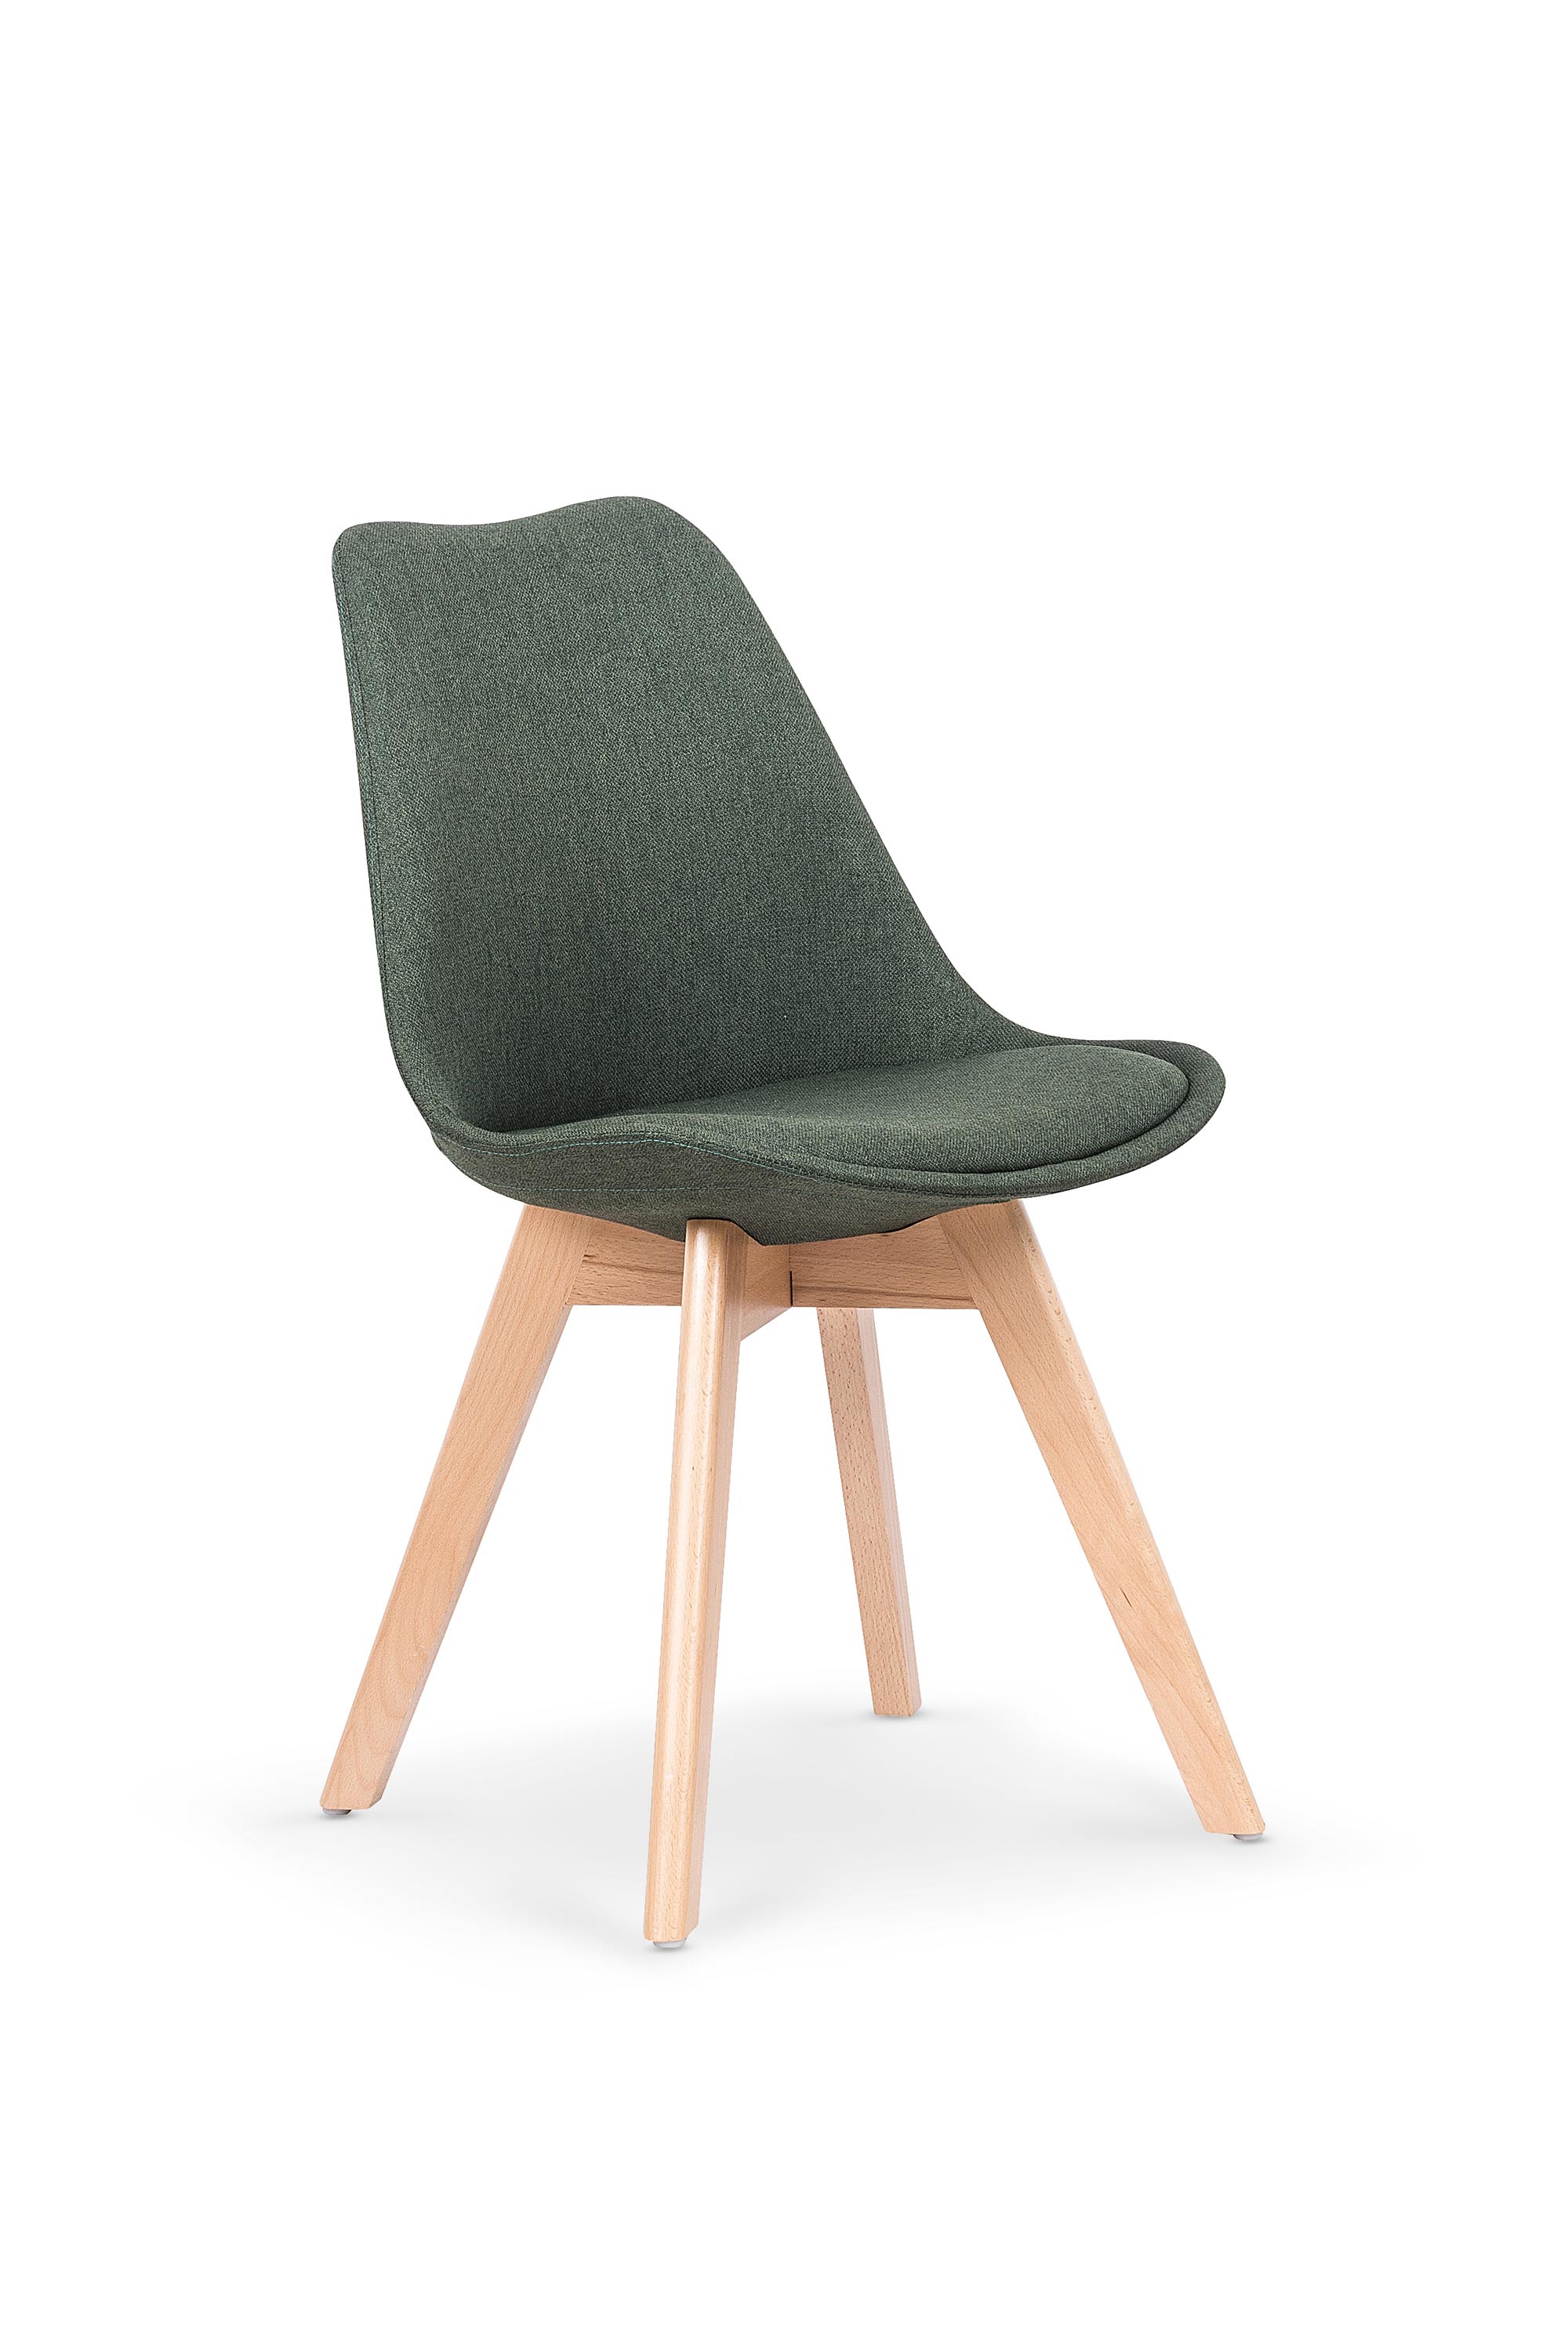 K303 szék - sötétzöld / bükk k303 Židle tmavý Zelený / bükk